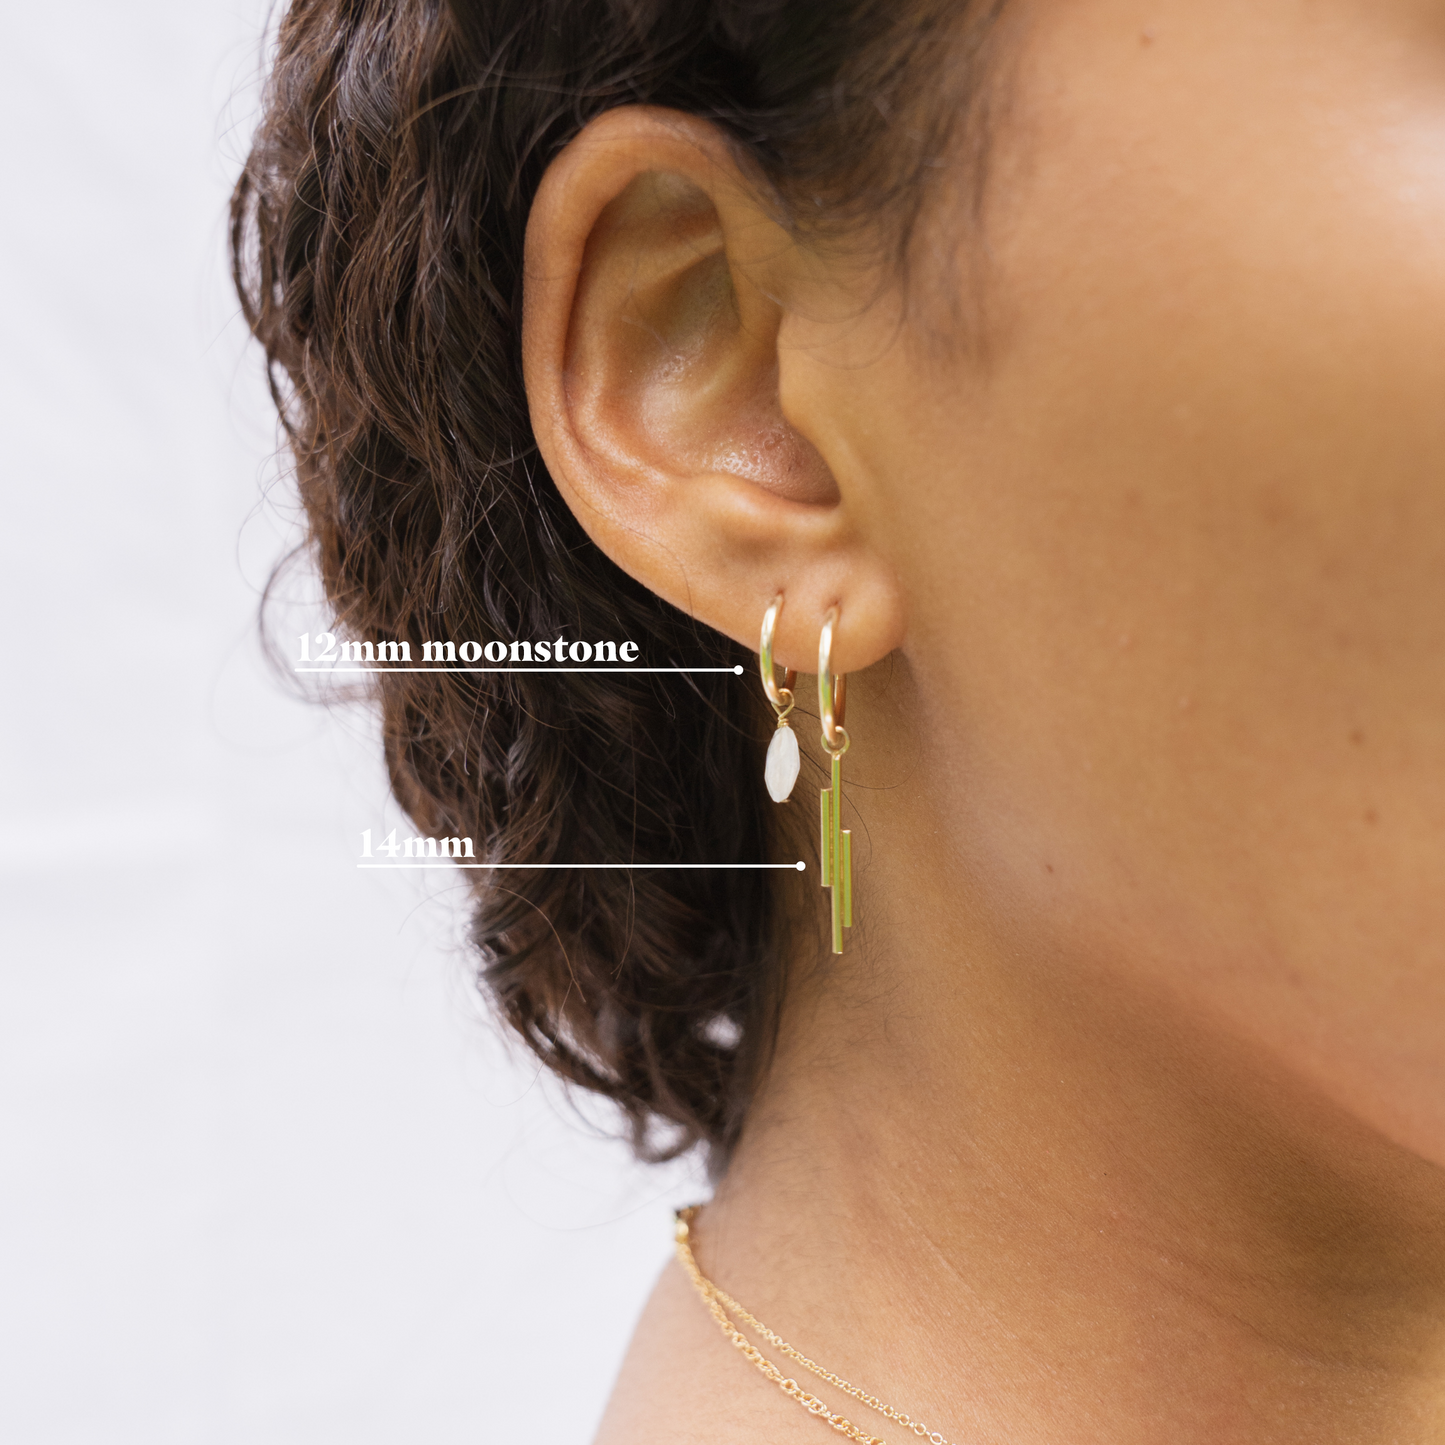 Short Lines pendant earring gold filled